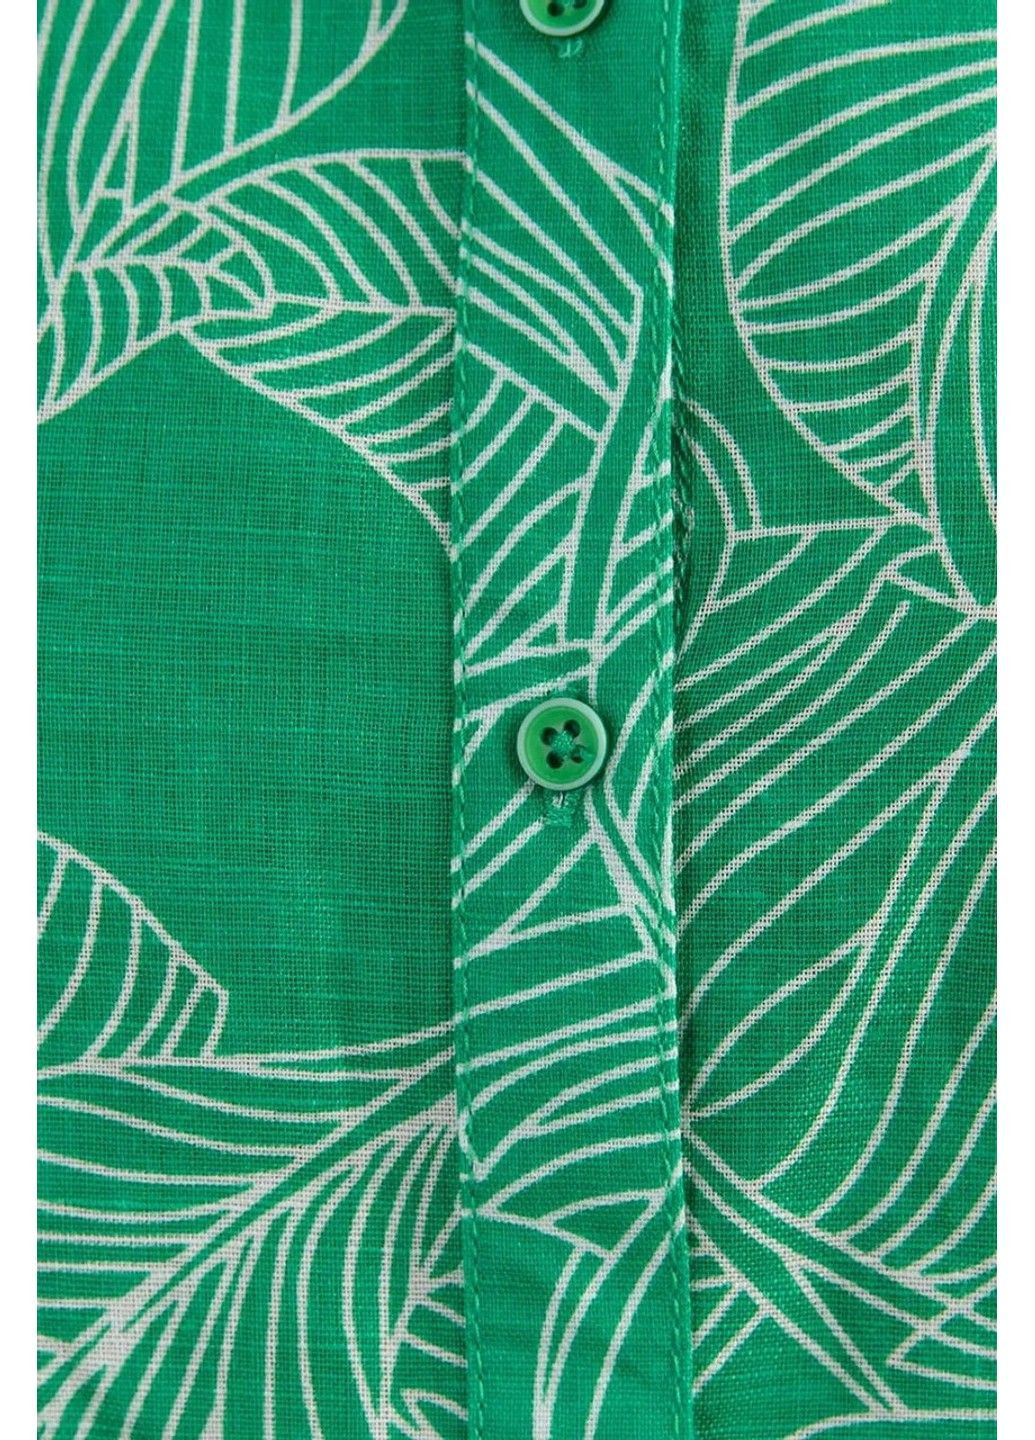 Зелена літня блузка s19-12047-500 Finn Flare